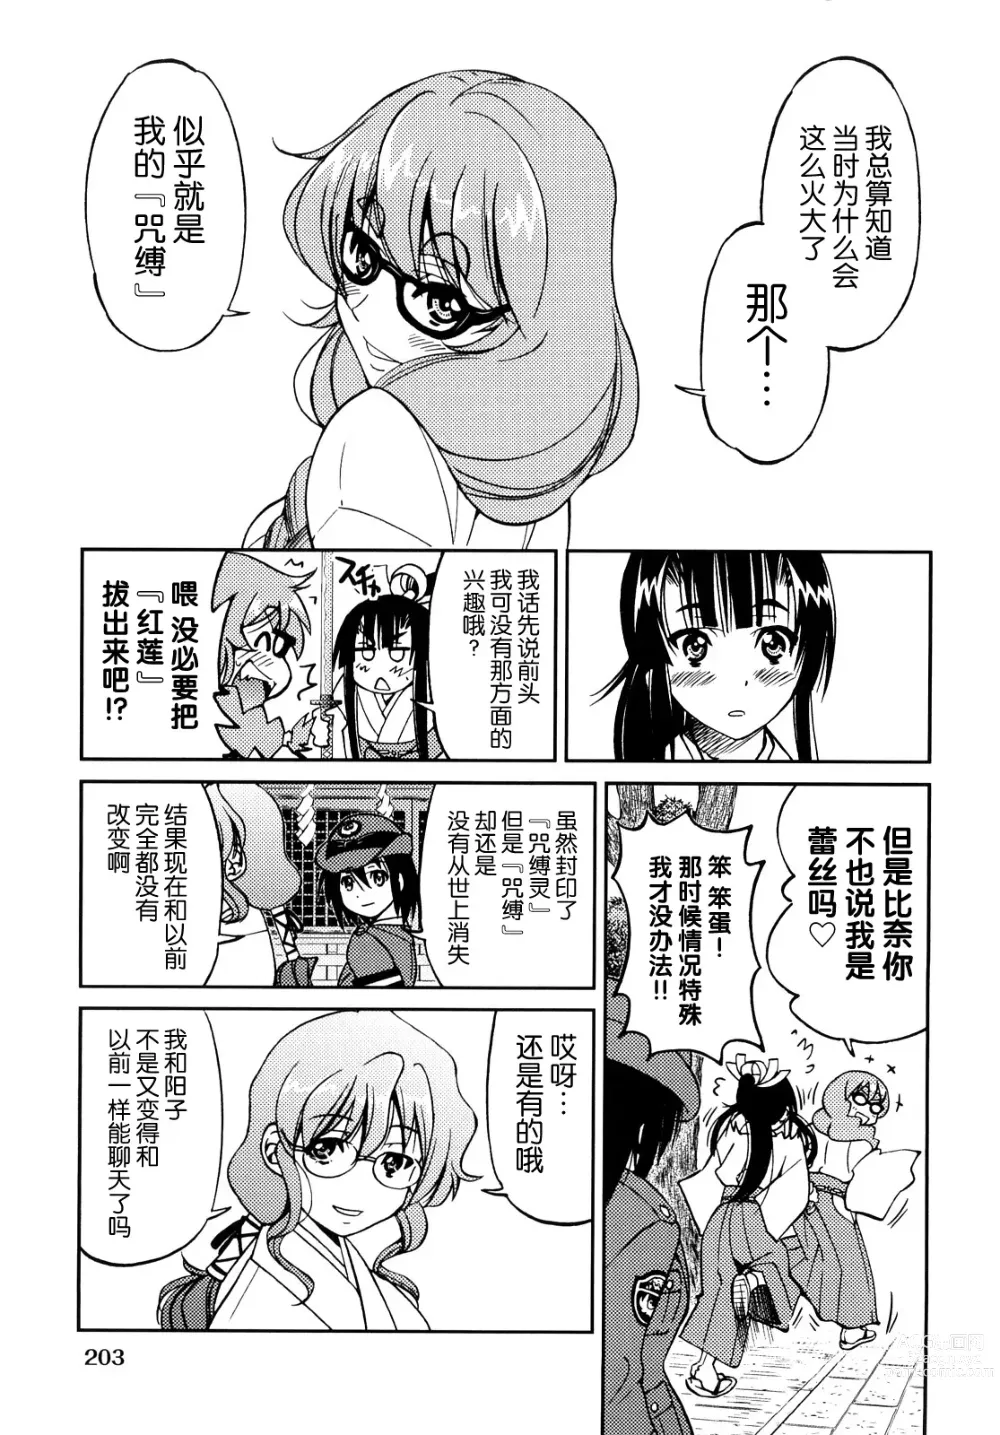 Page 206 of manga Shibarare Hime